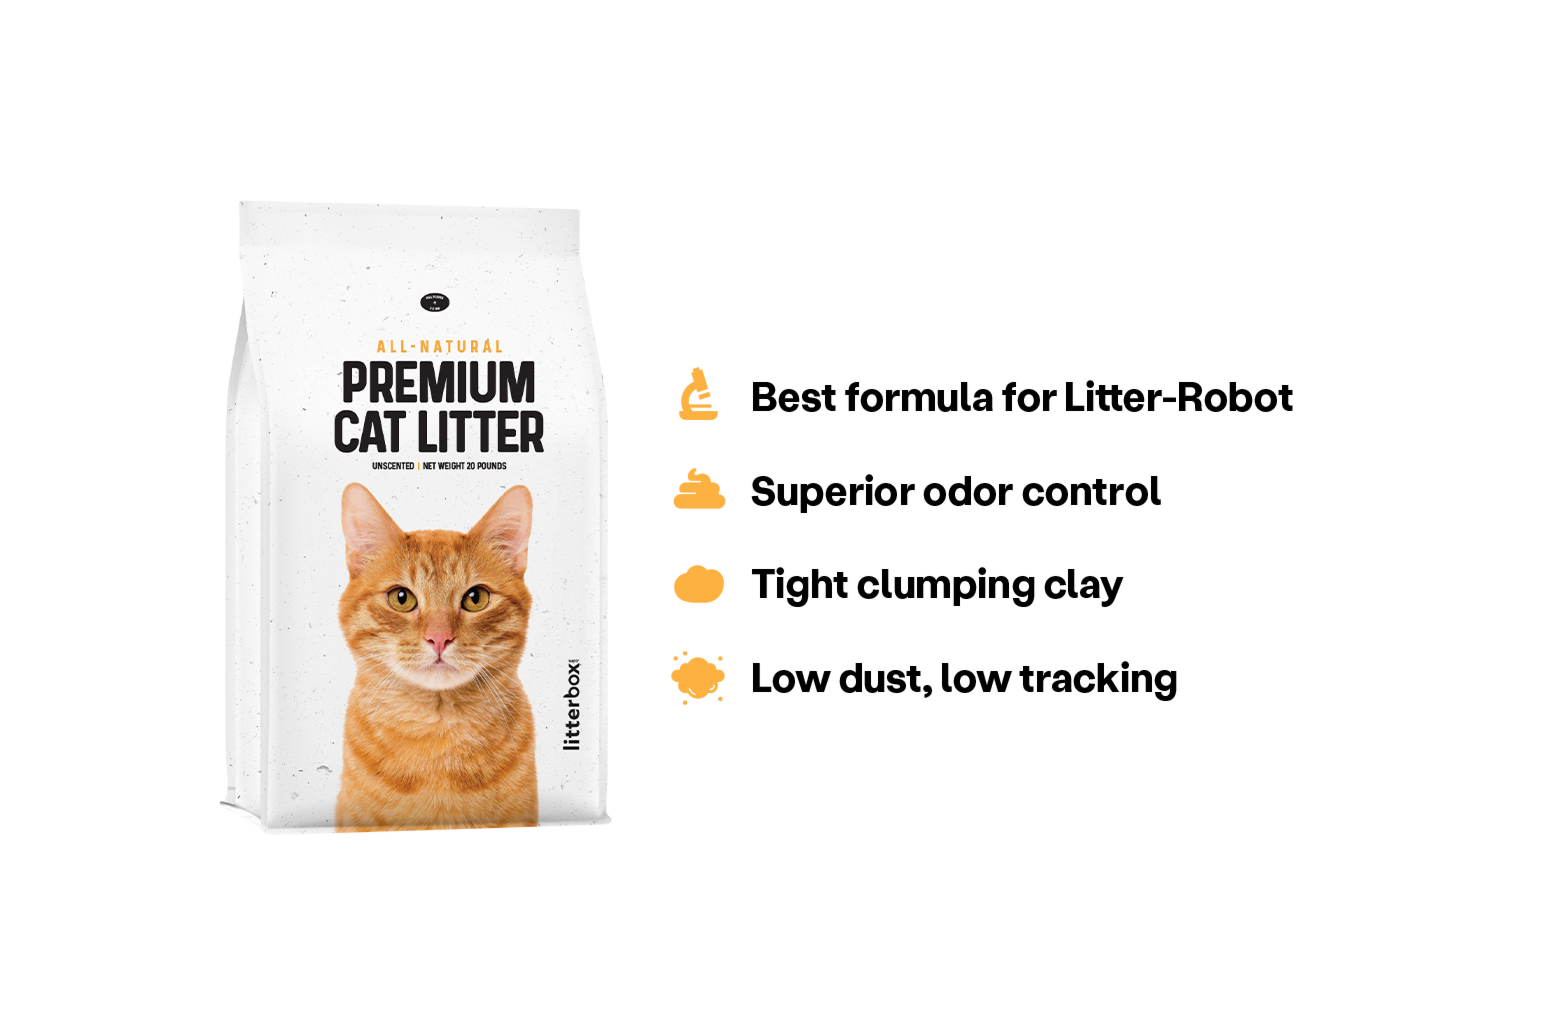 Premium Cat Litter For Litter-Robot